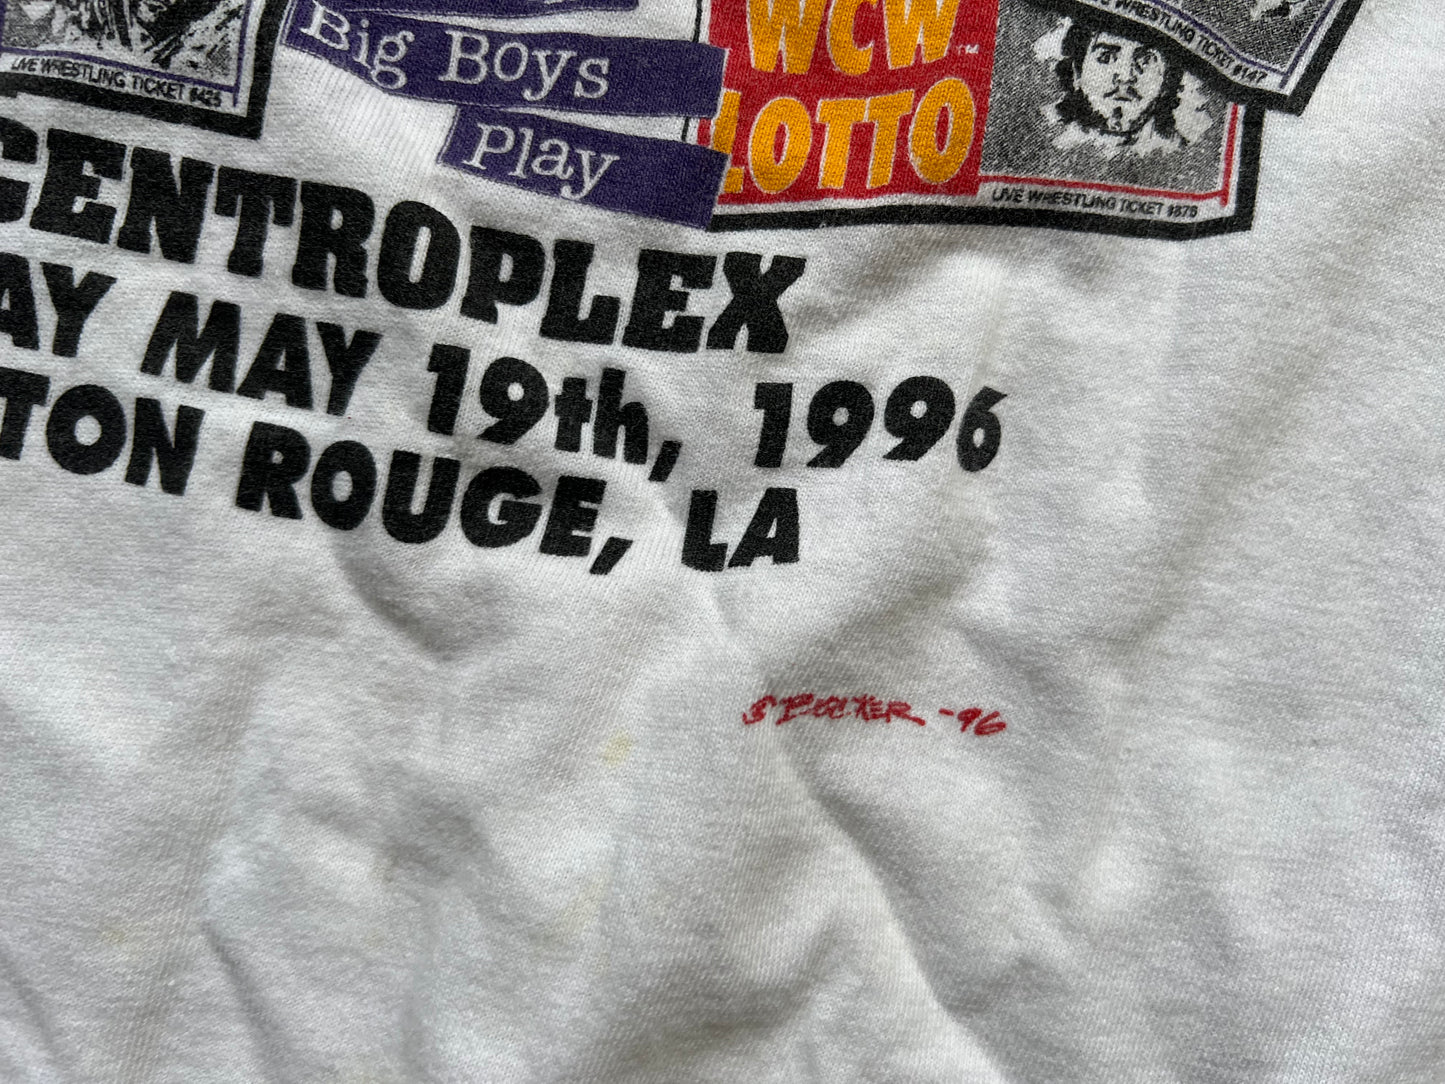 1996 WCW Slamboree shirt